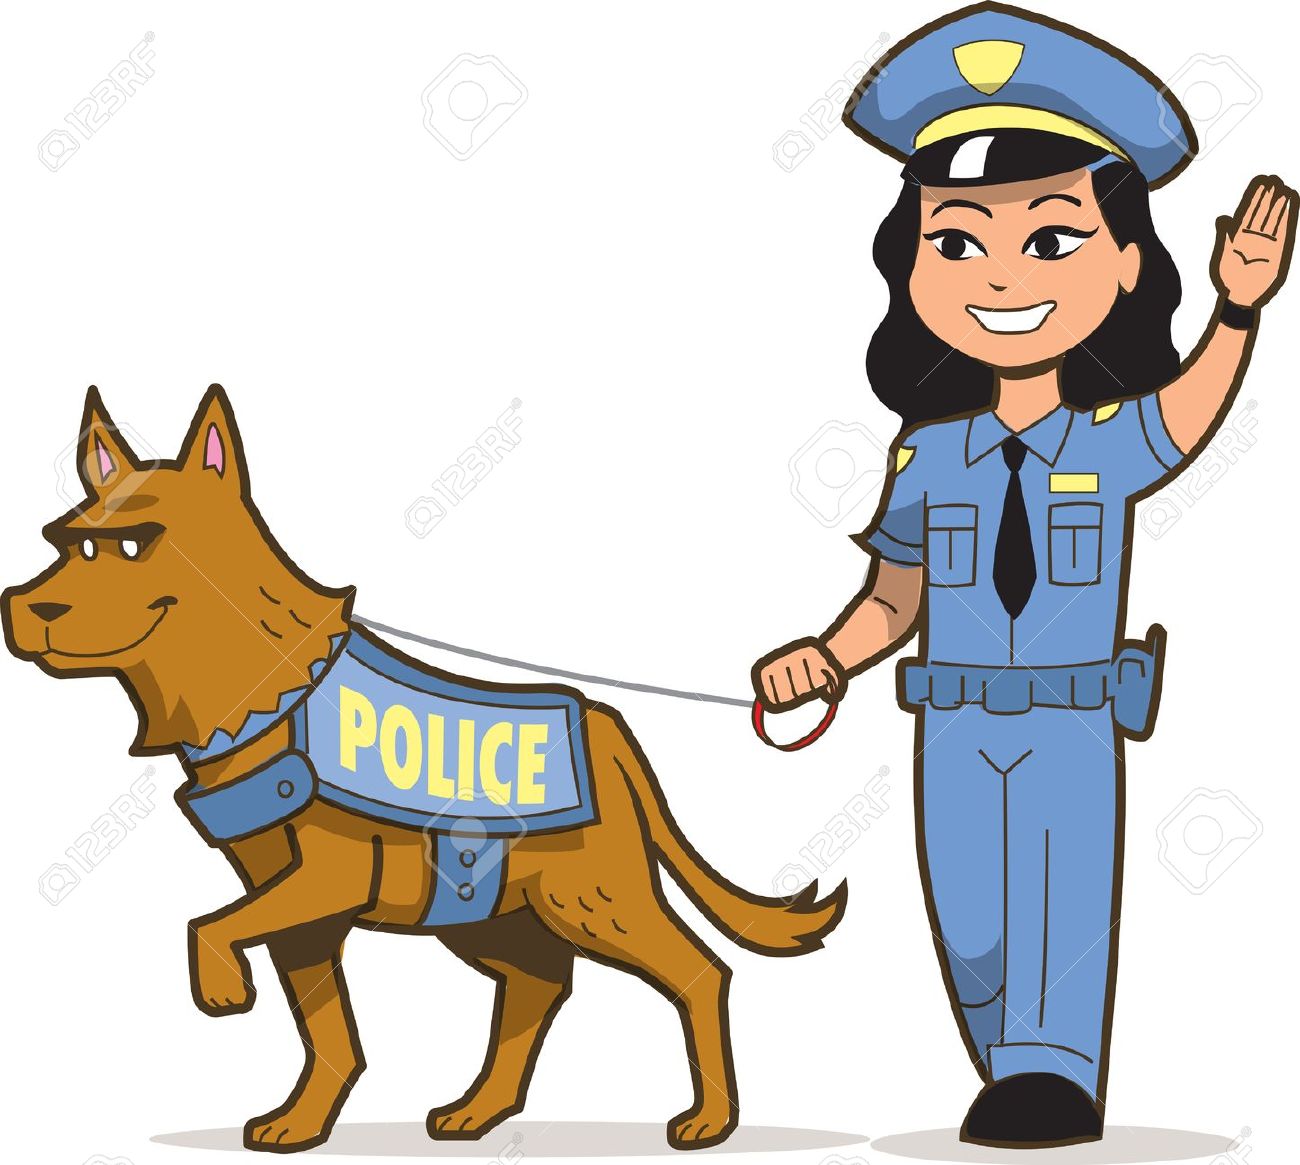 police dog: Police dog theme 